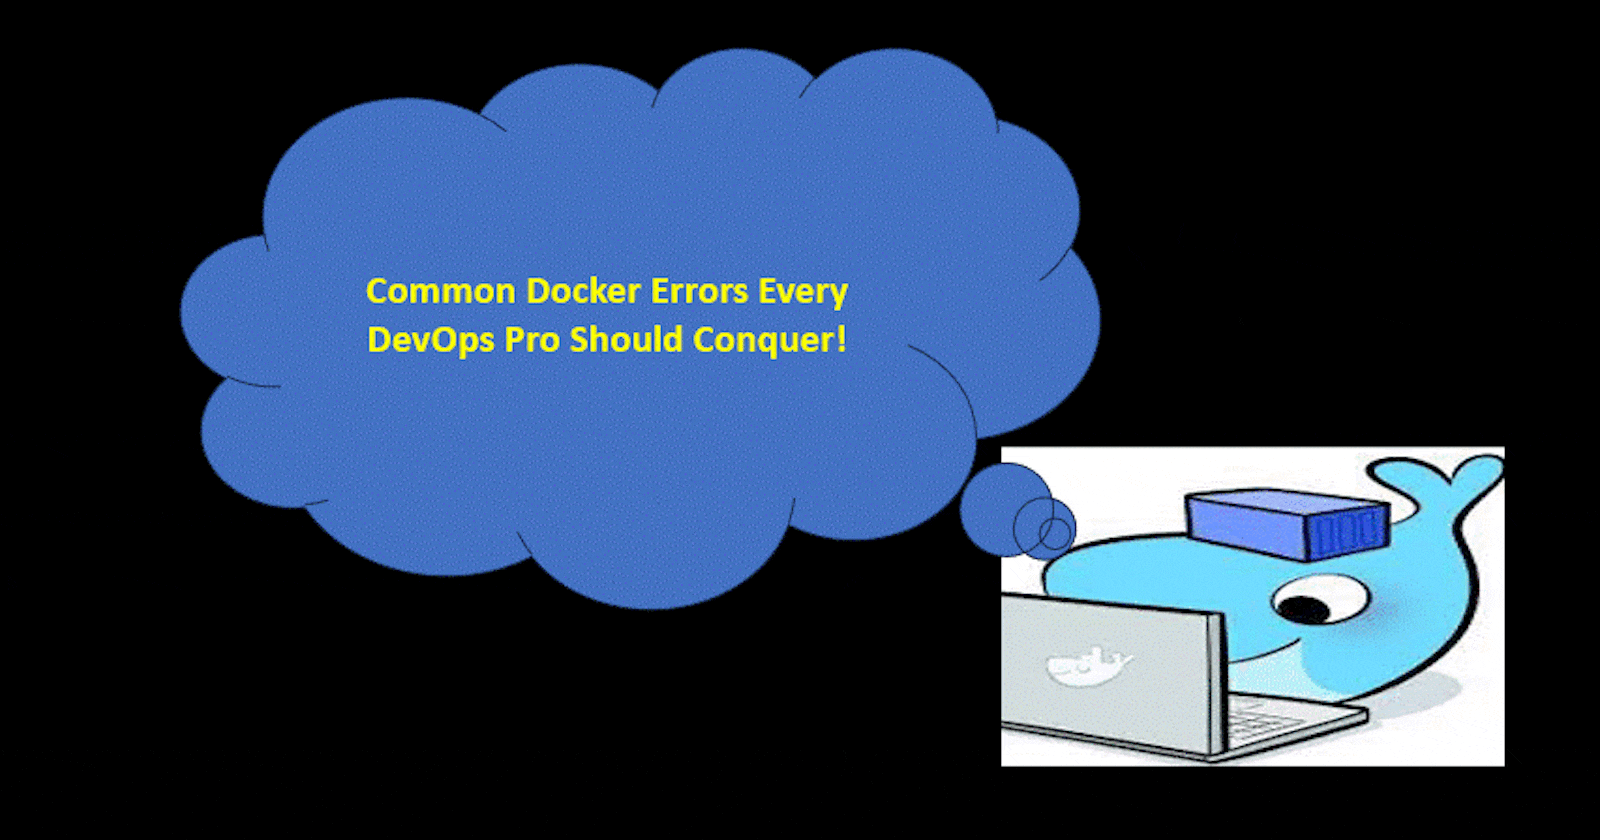 Title: "Common Docker Errors Every DevOps Pro Should Conquer! 😅🐳"